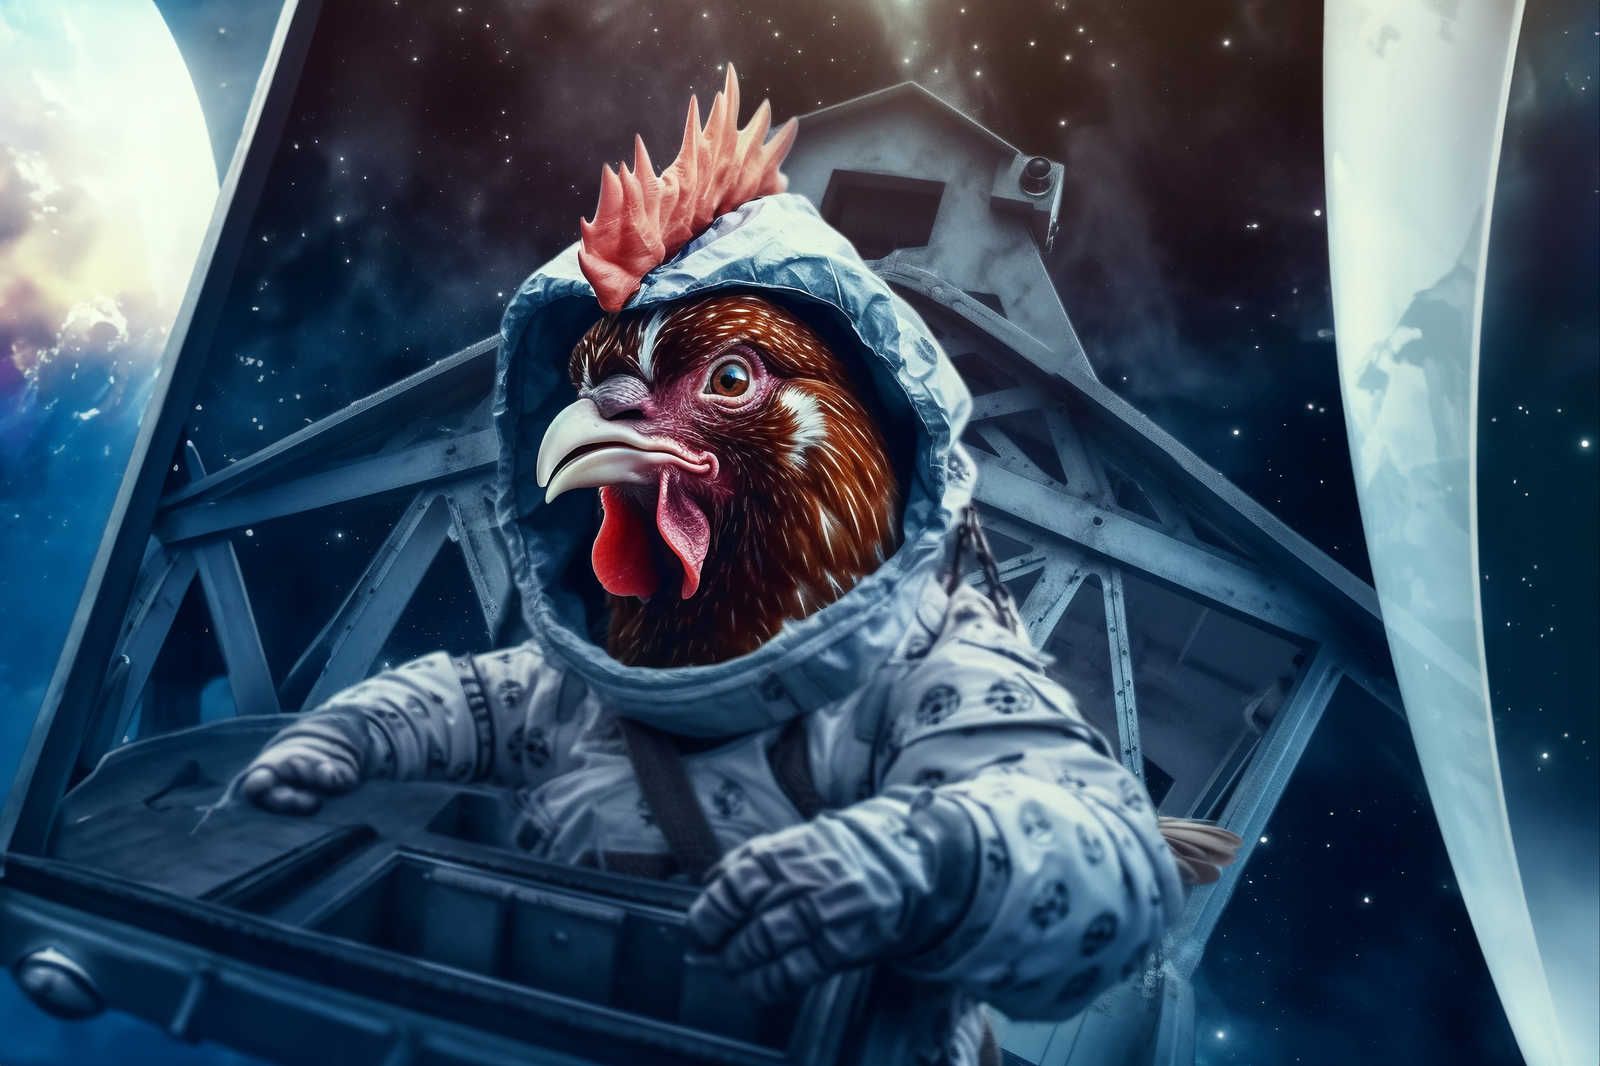             Toile KI »Space Chicken« - 120 cm x 80 cm
        